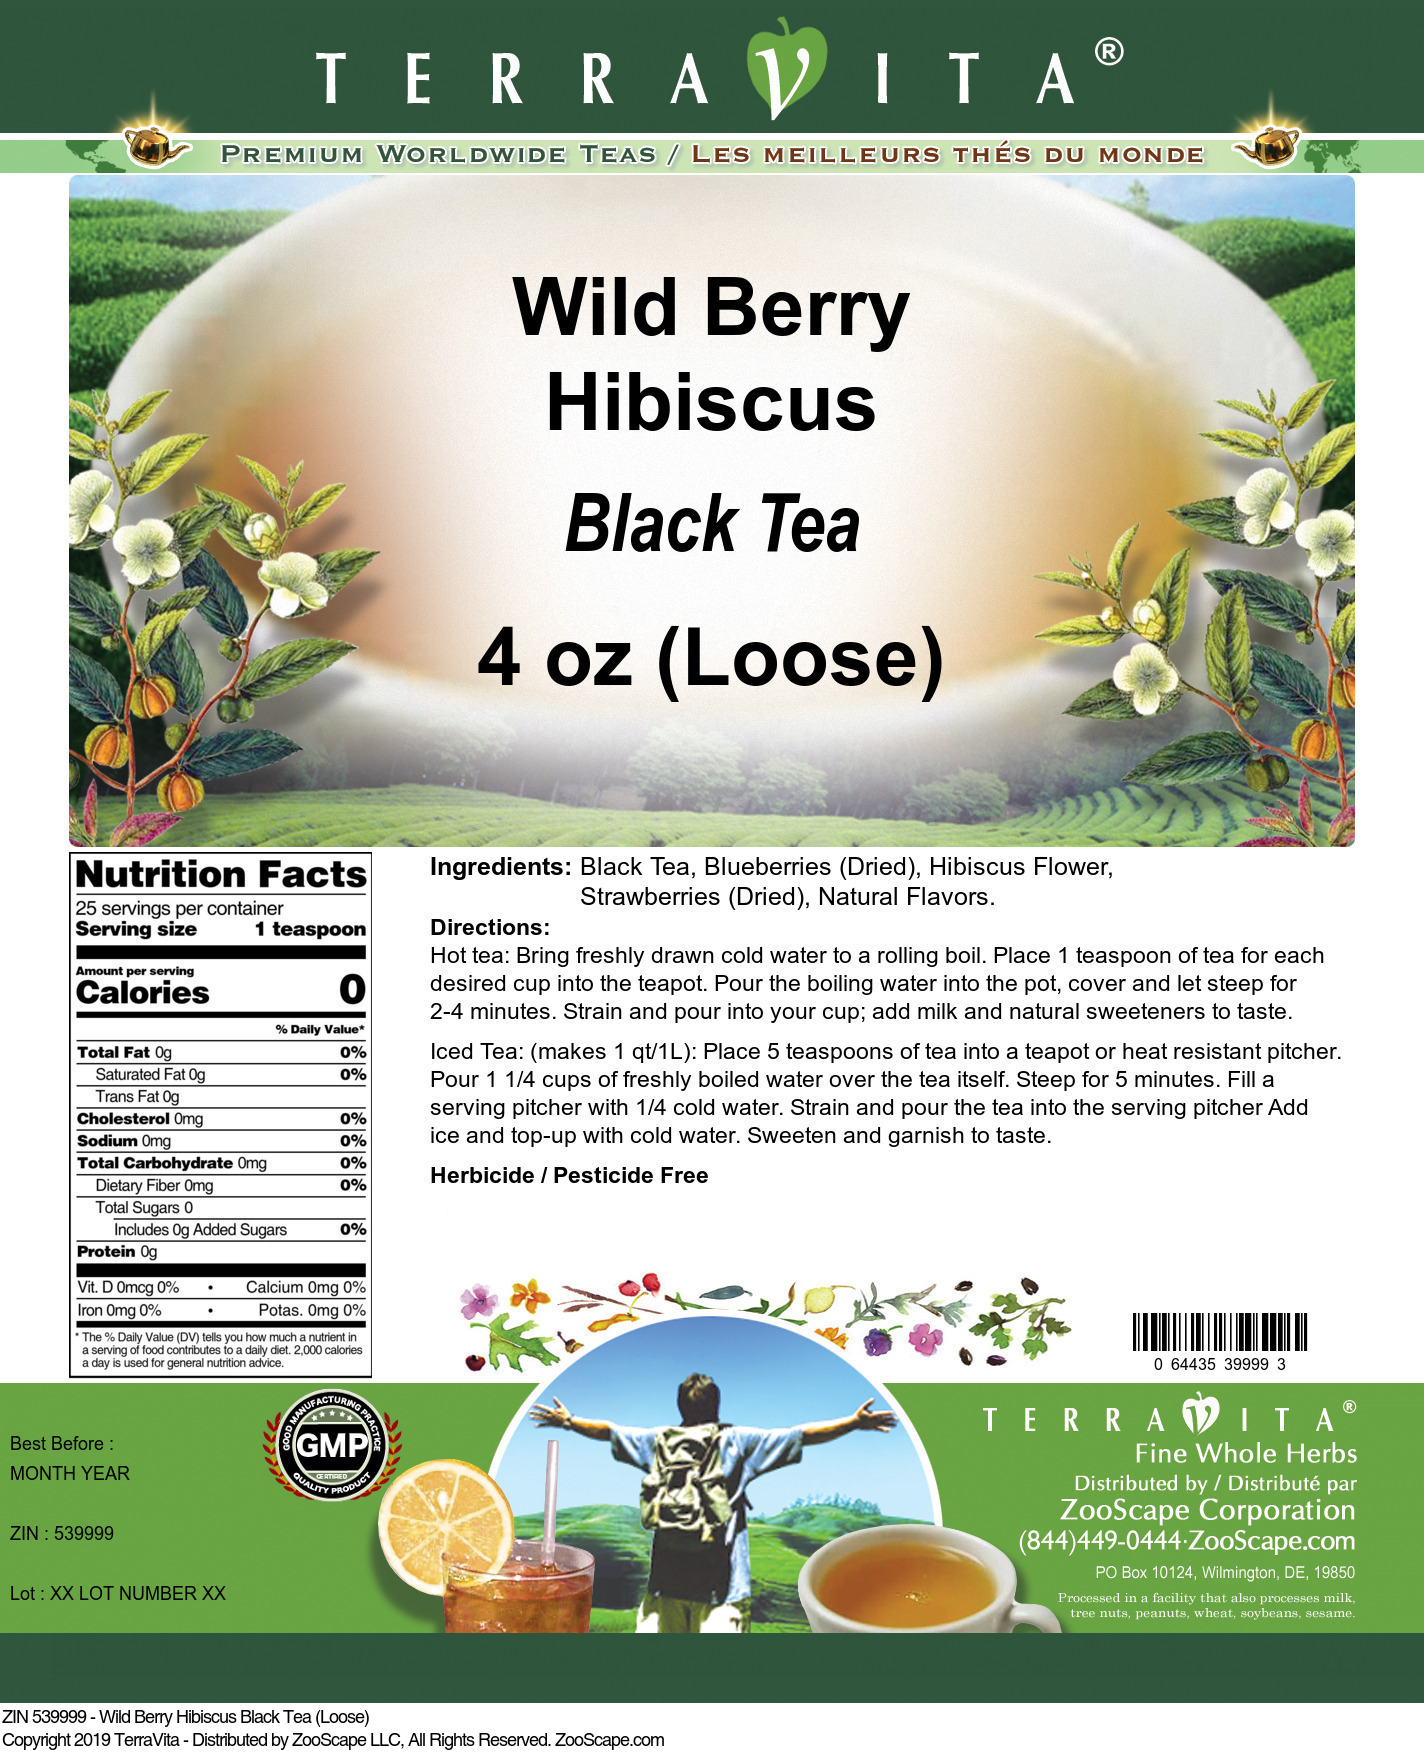 Wild Berry Hibiscus Black Tea (Loose) - Label